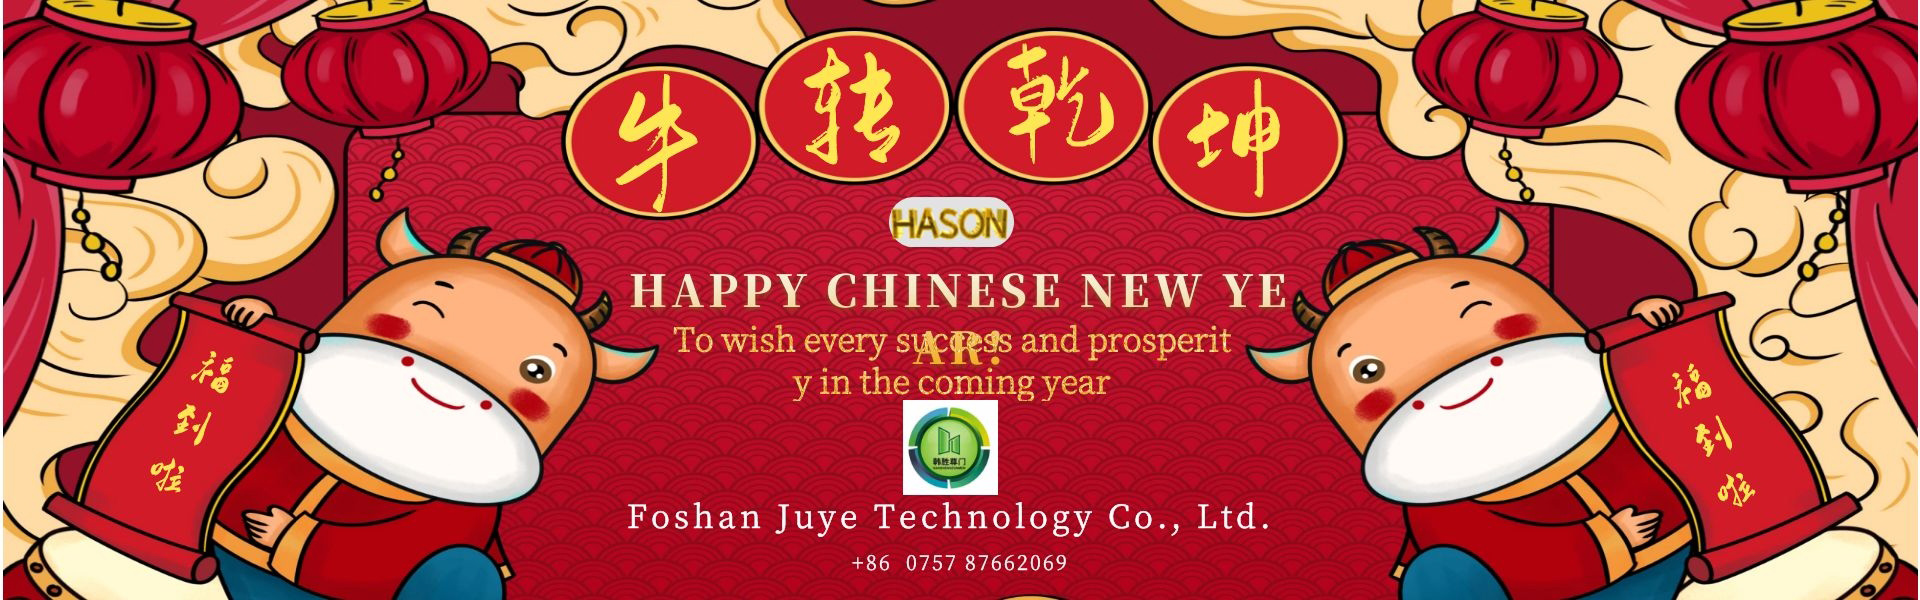 Foshan Juye Technology Co., Ltd.